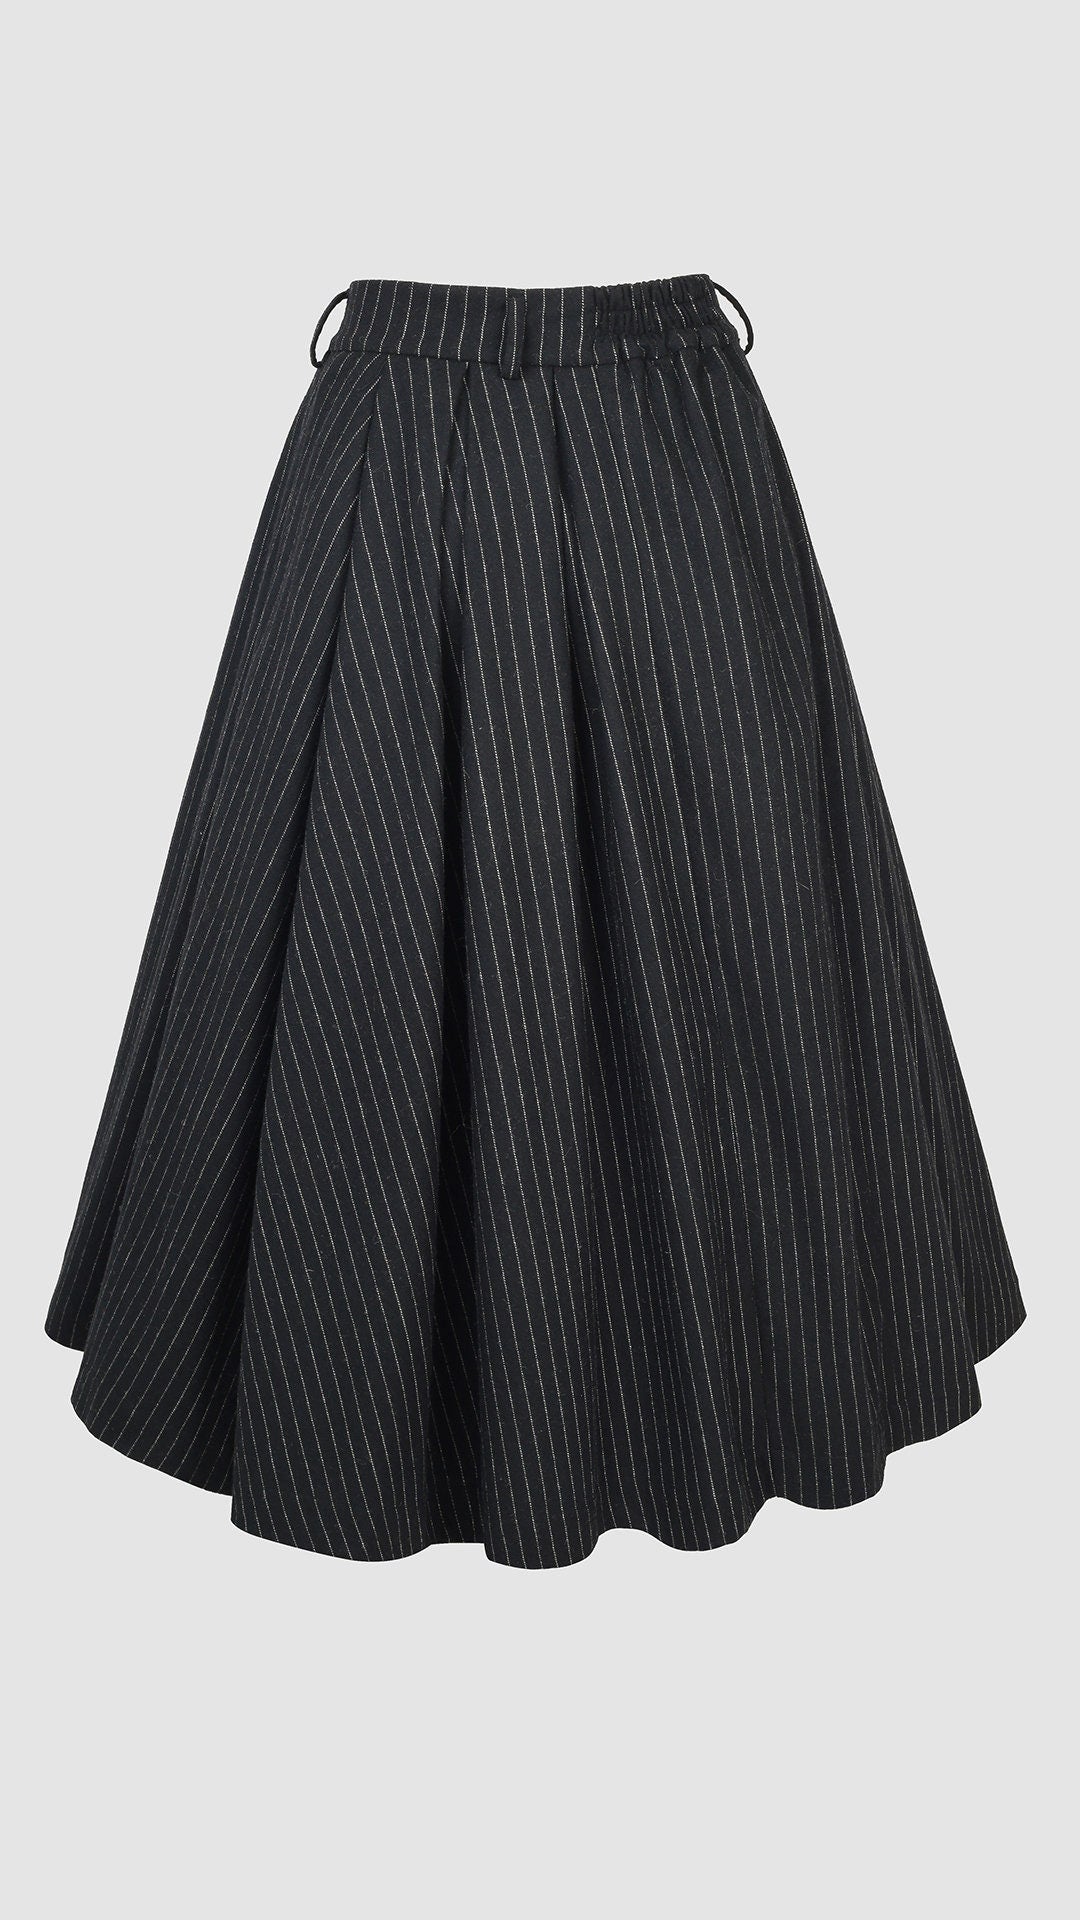 Santal 3 | Striped Wool Skirt in black – Linennaive